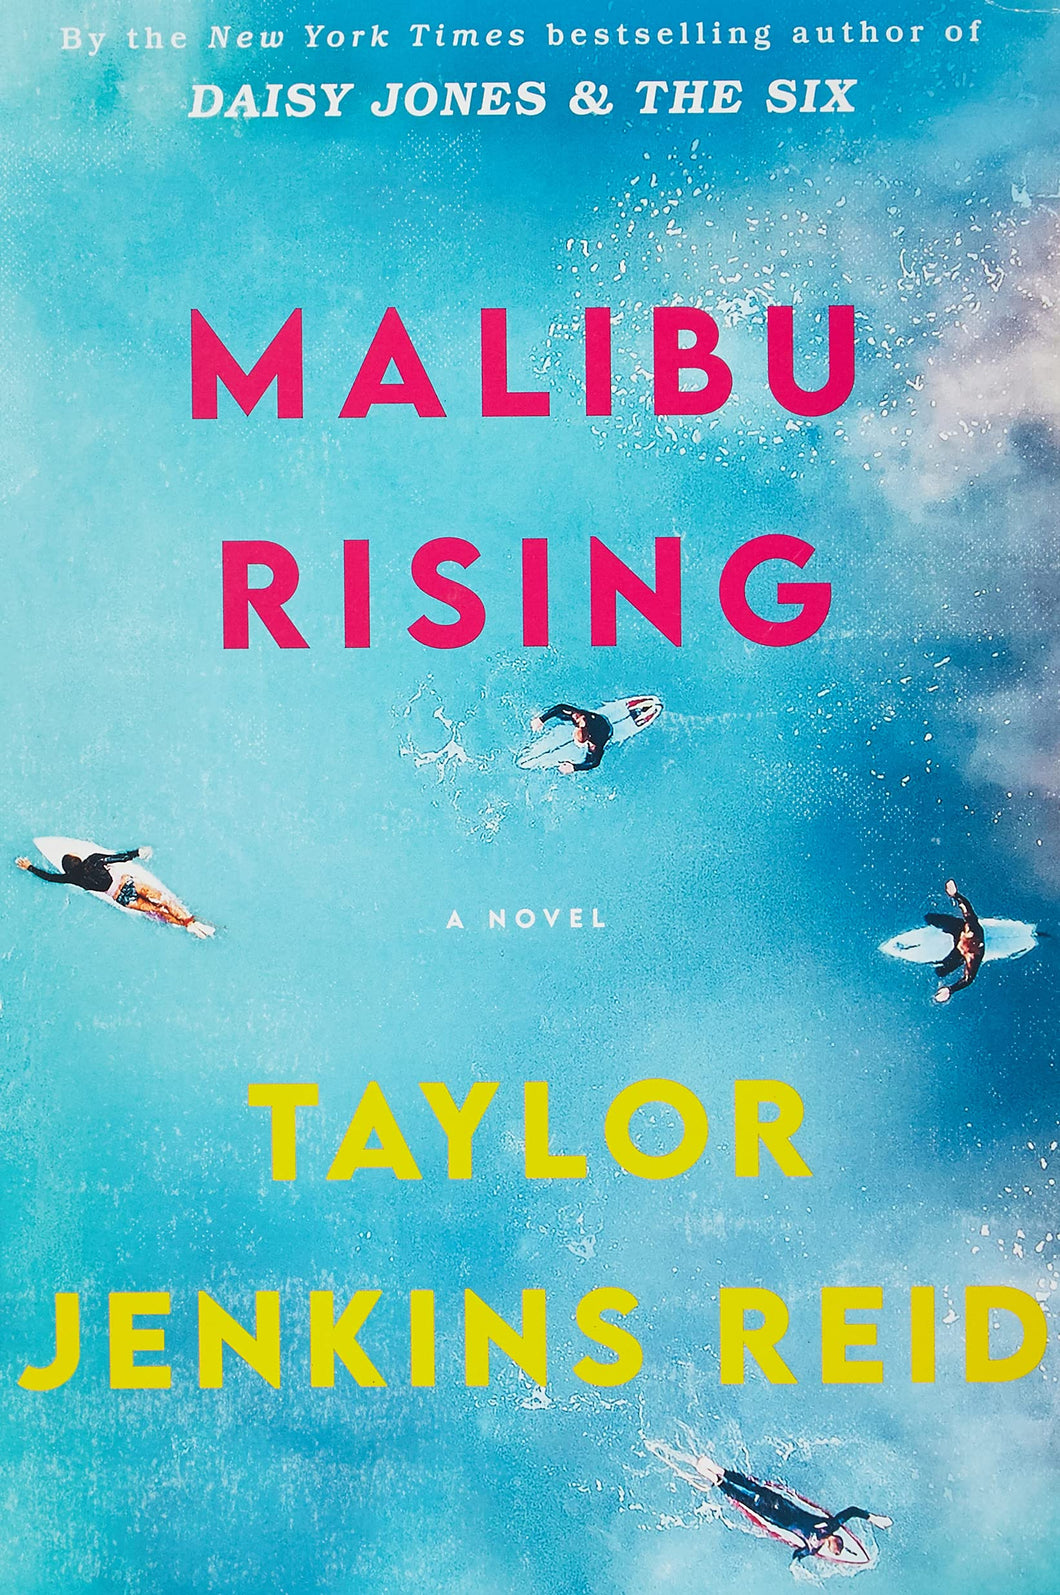 MALIBU RISING - Taylor Jenkins Reid